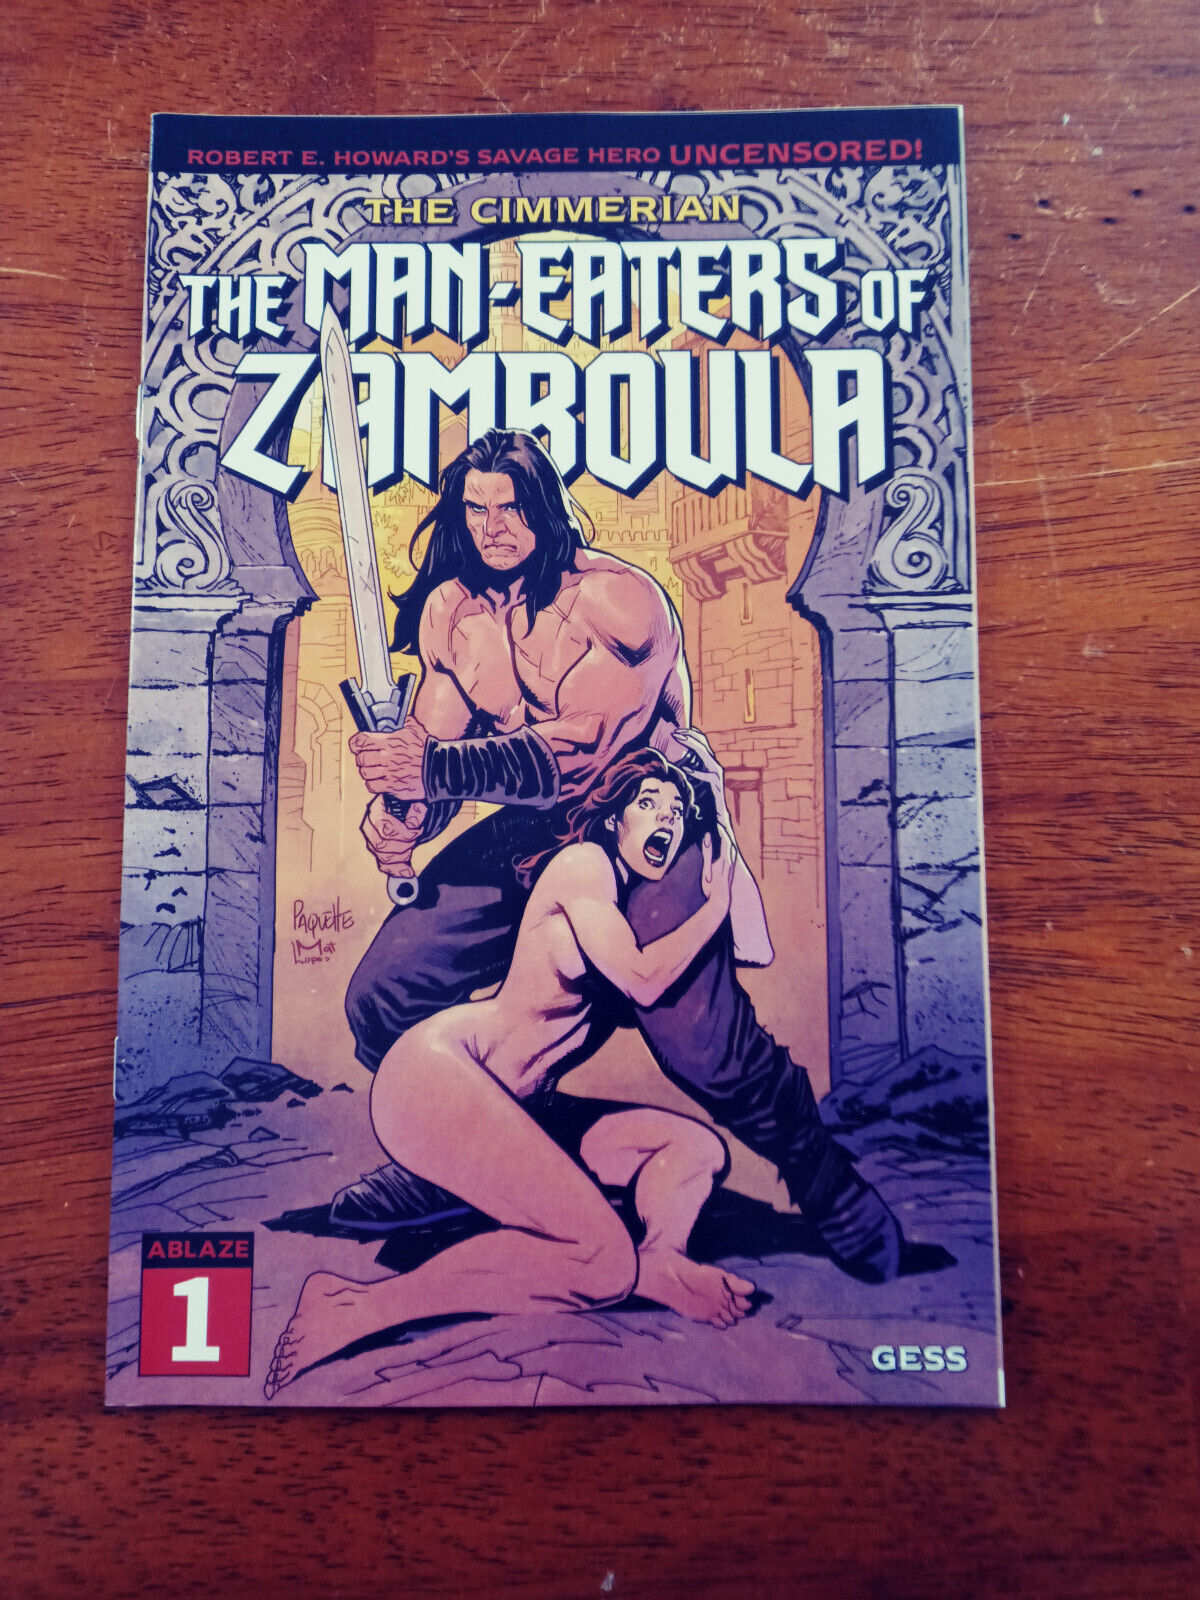 The Cimmerian: The Man-Eaters of Zamboula #1 *Ablaze Media* 2021 comic